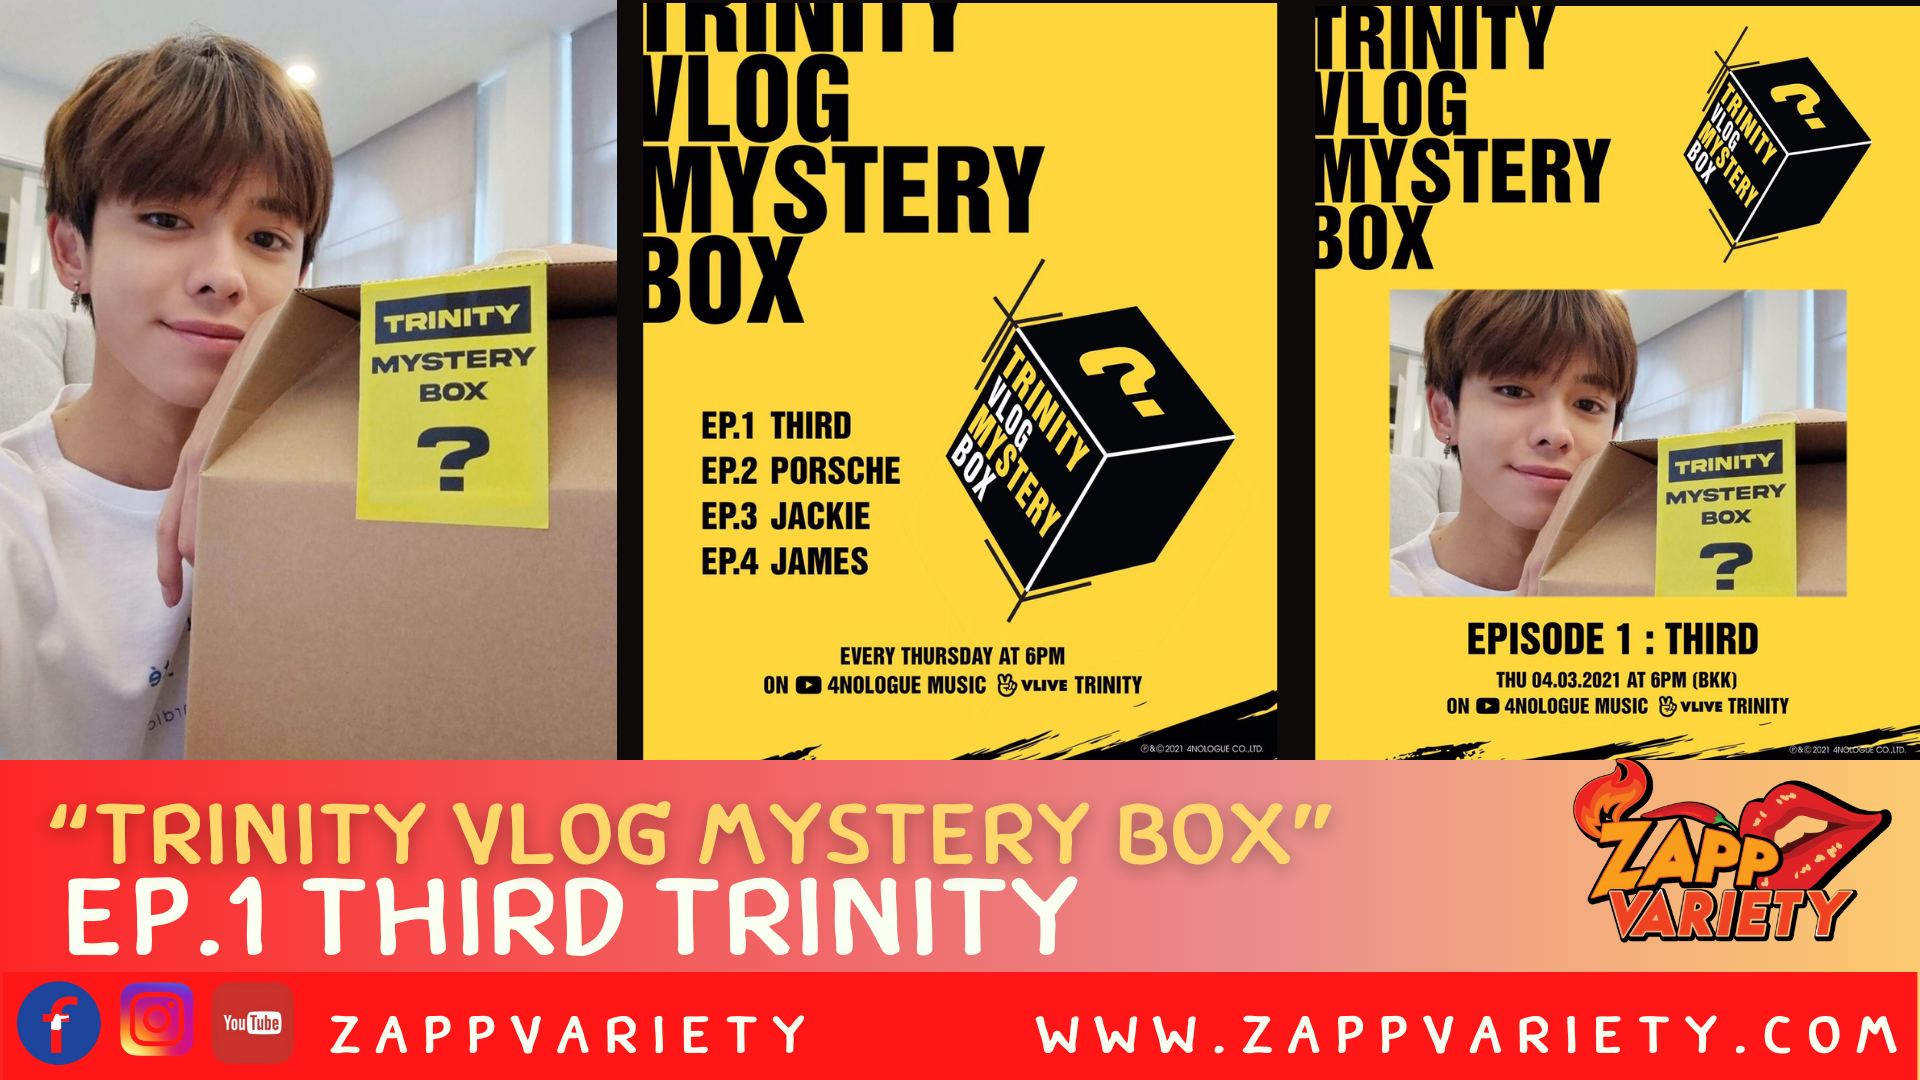 “TRINITY VLOG MYSTERY BOX” EP.1 THIRD TRINITY